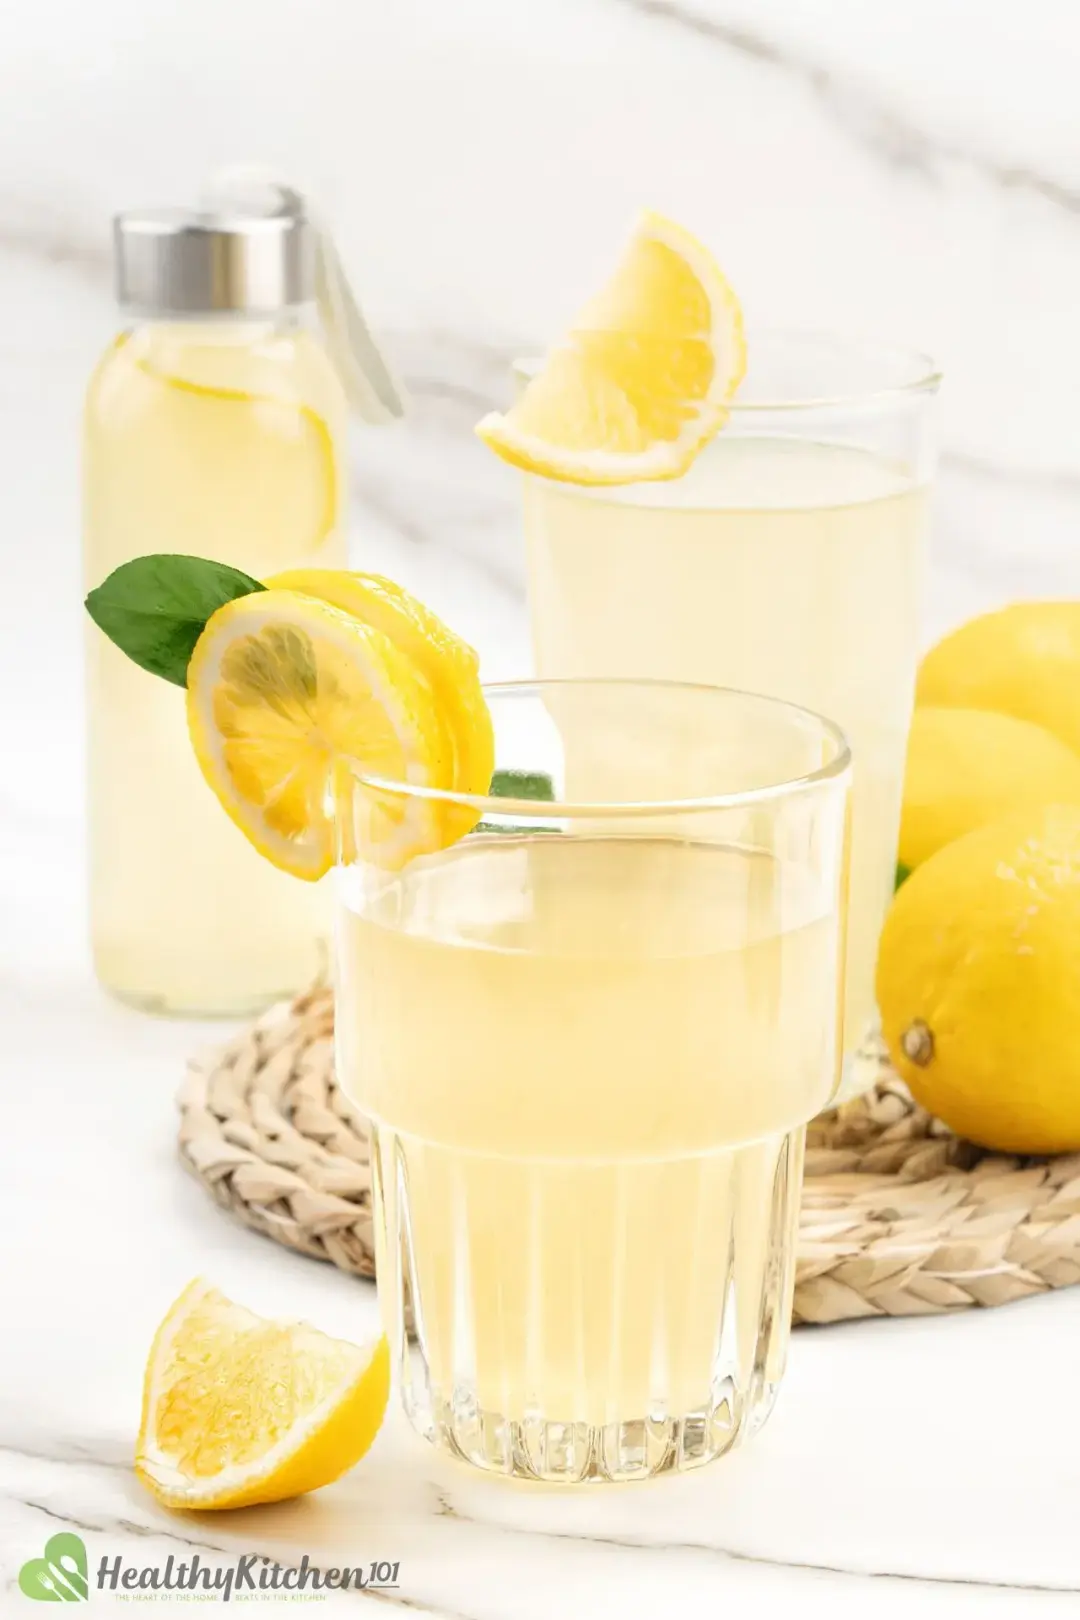 Two glasses of lemonade and lemon wedge garnish, with a bottle of lemonade in the back